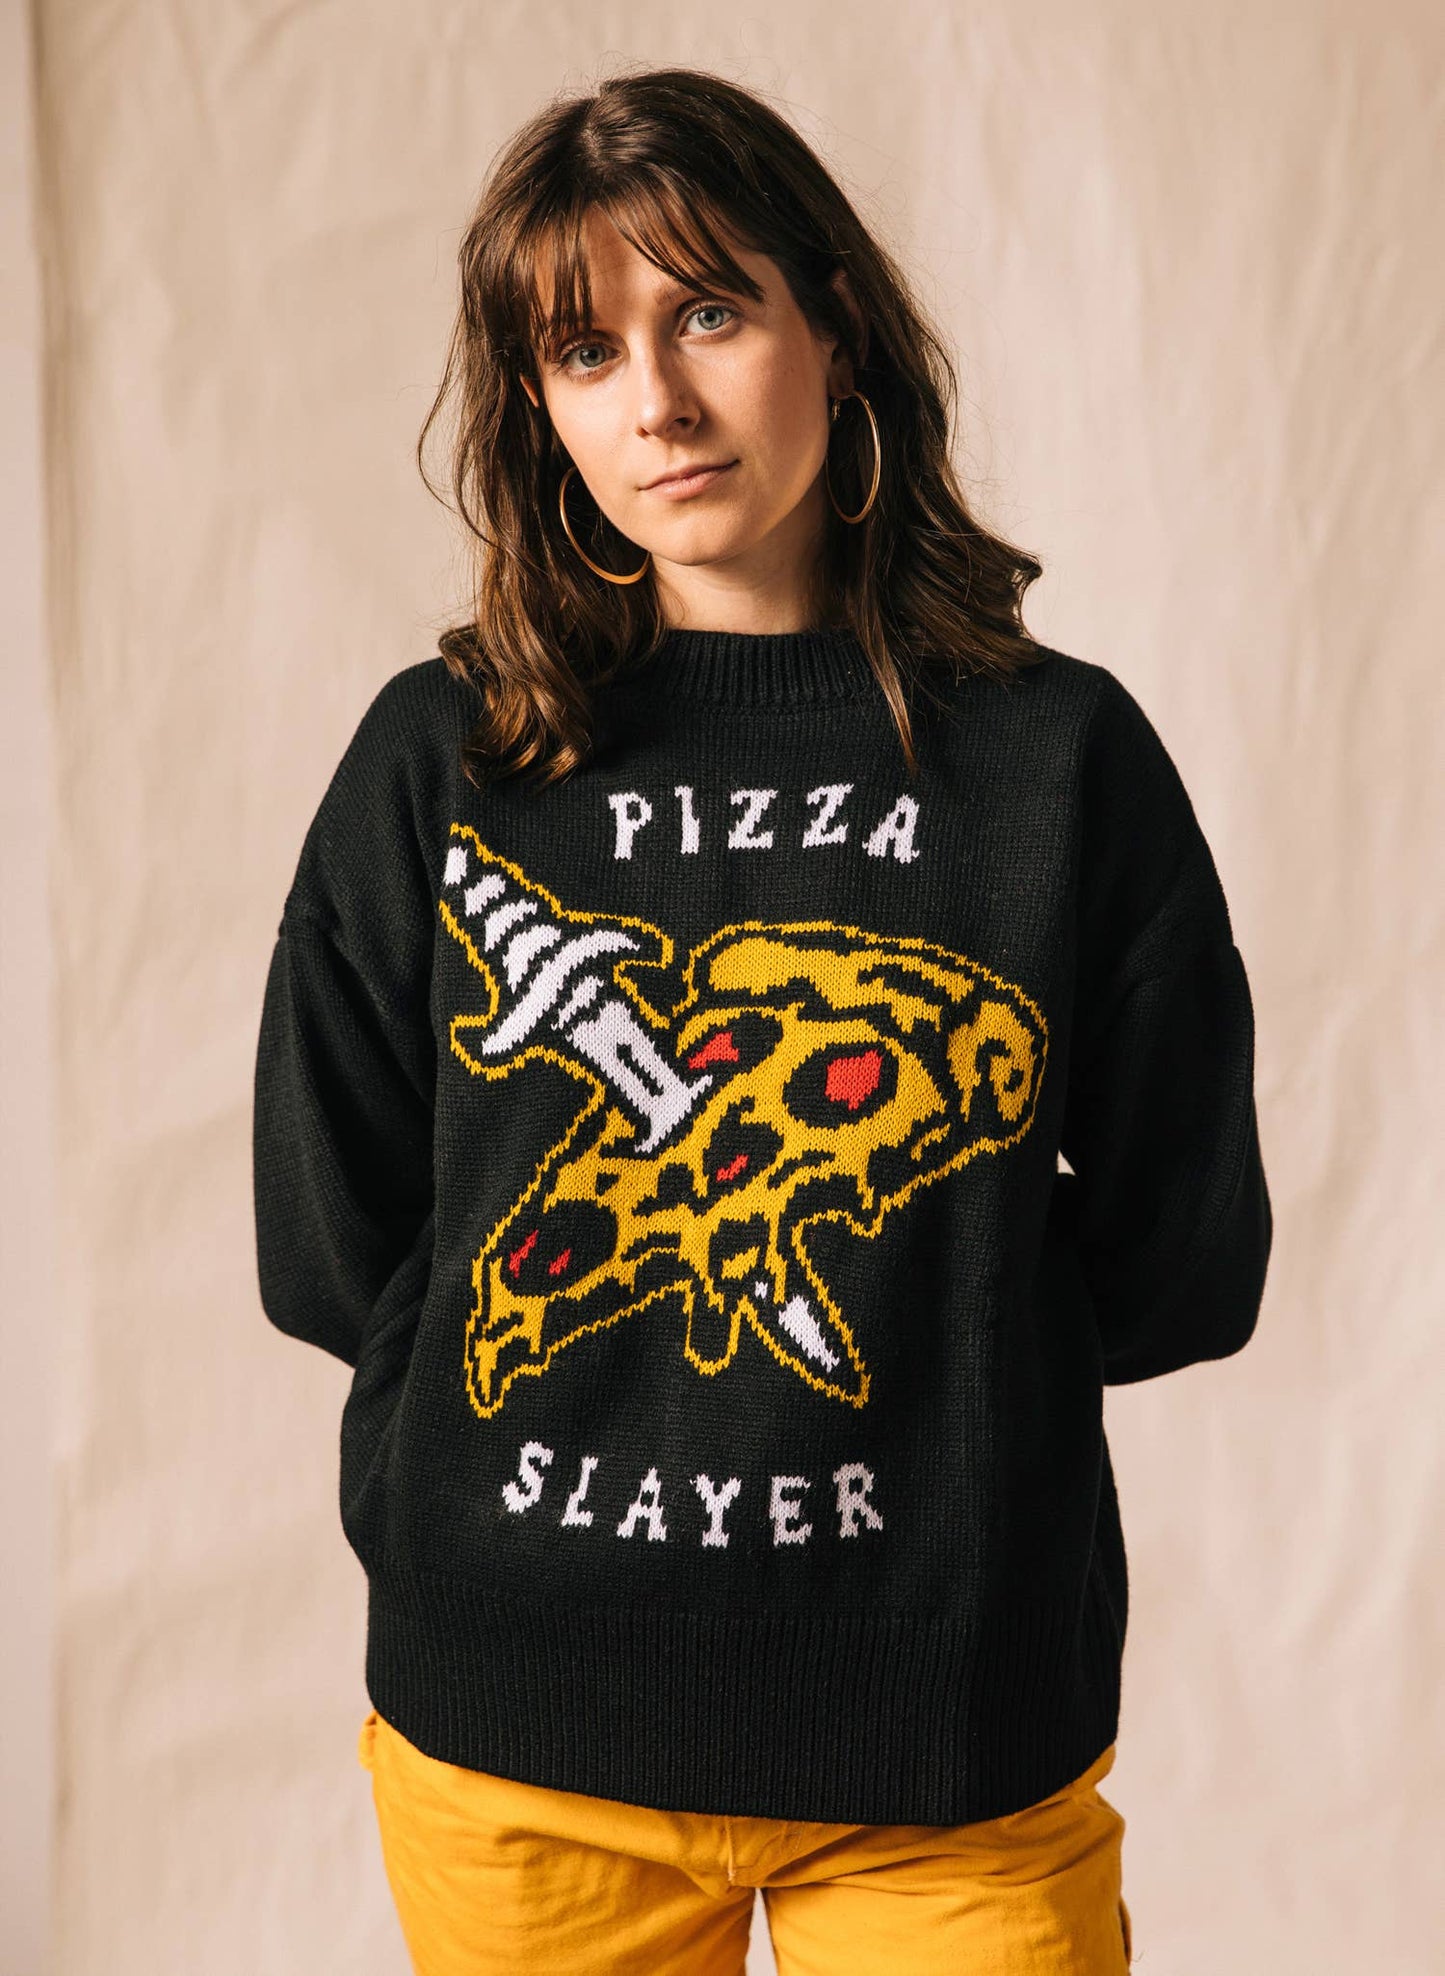 Women's Knit Sweater - Pizza Slayer